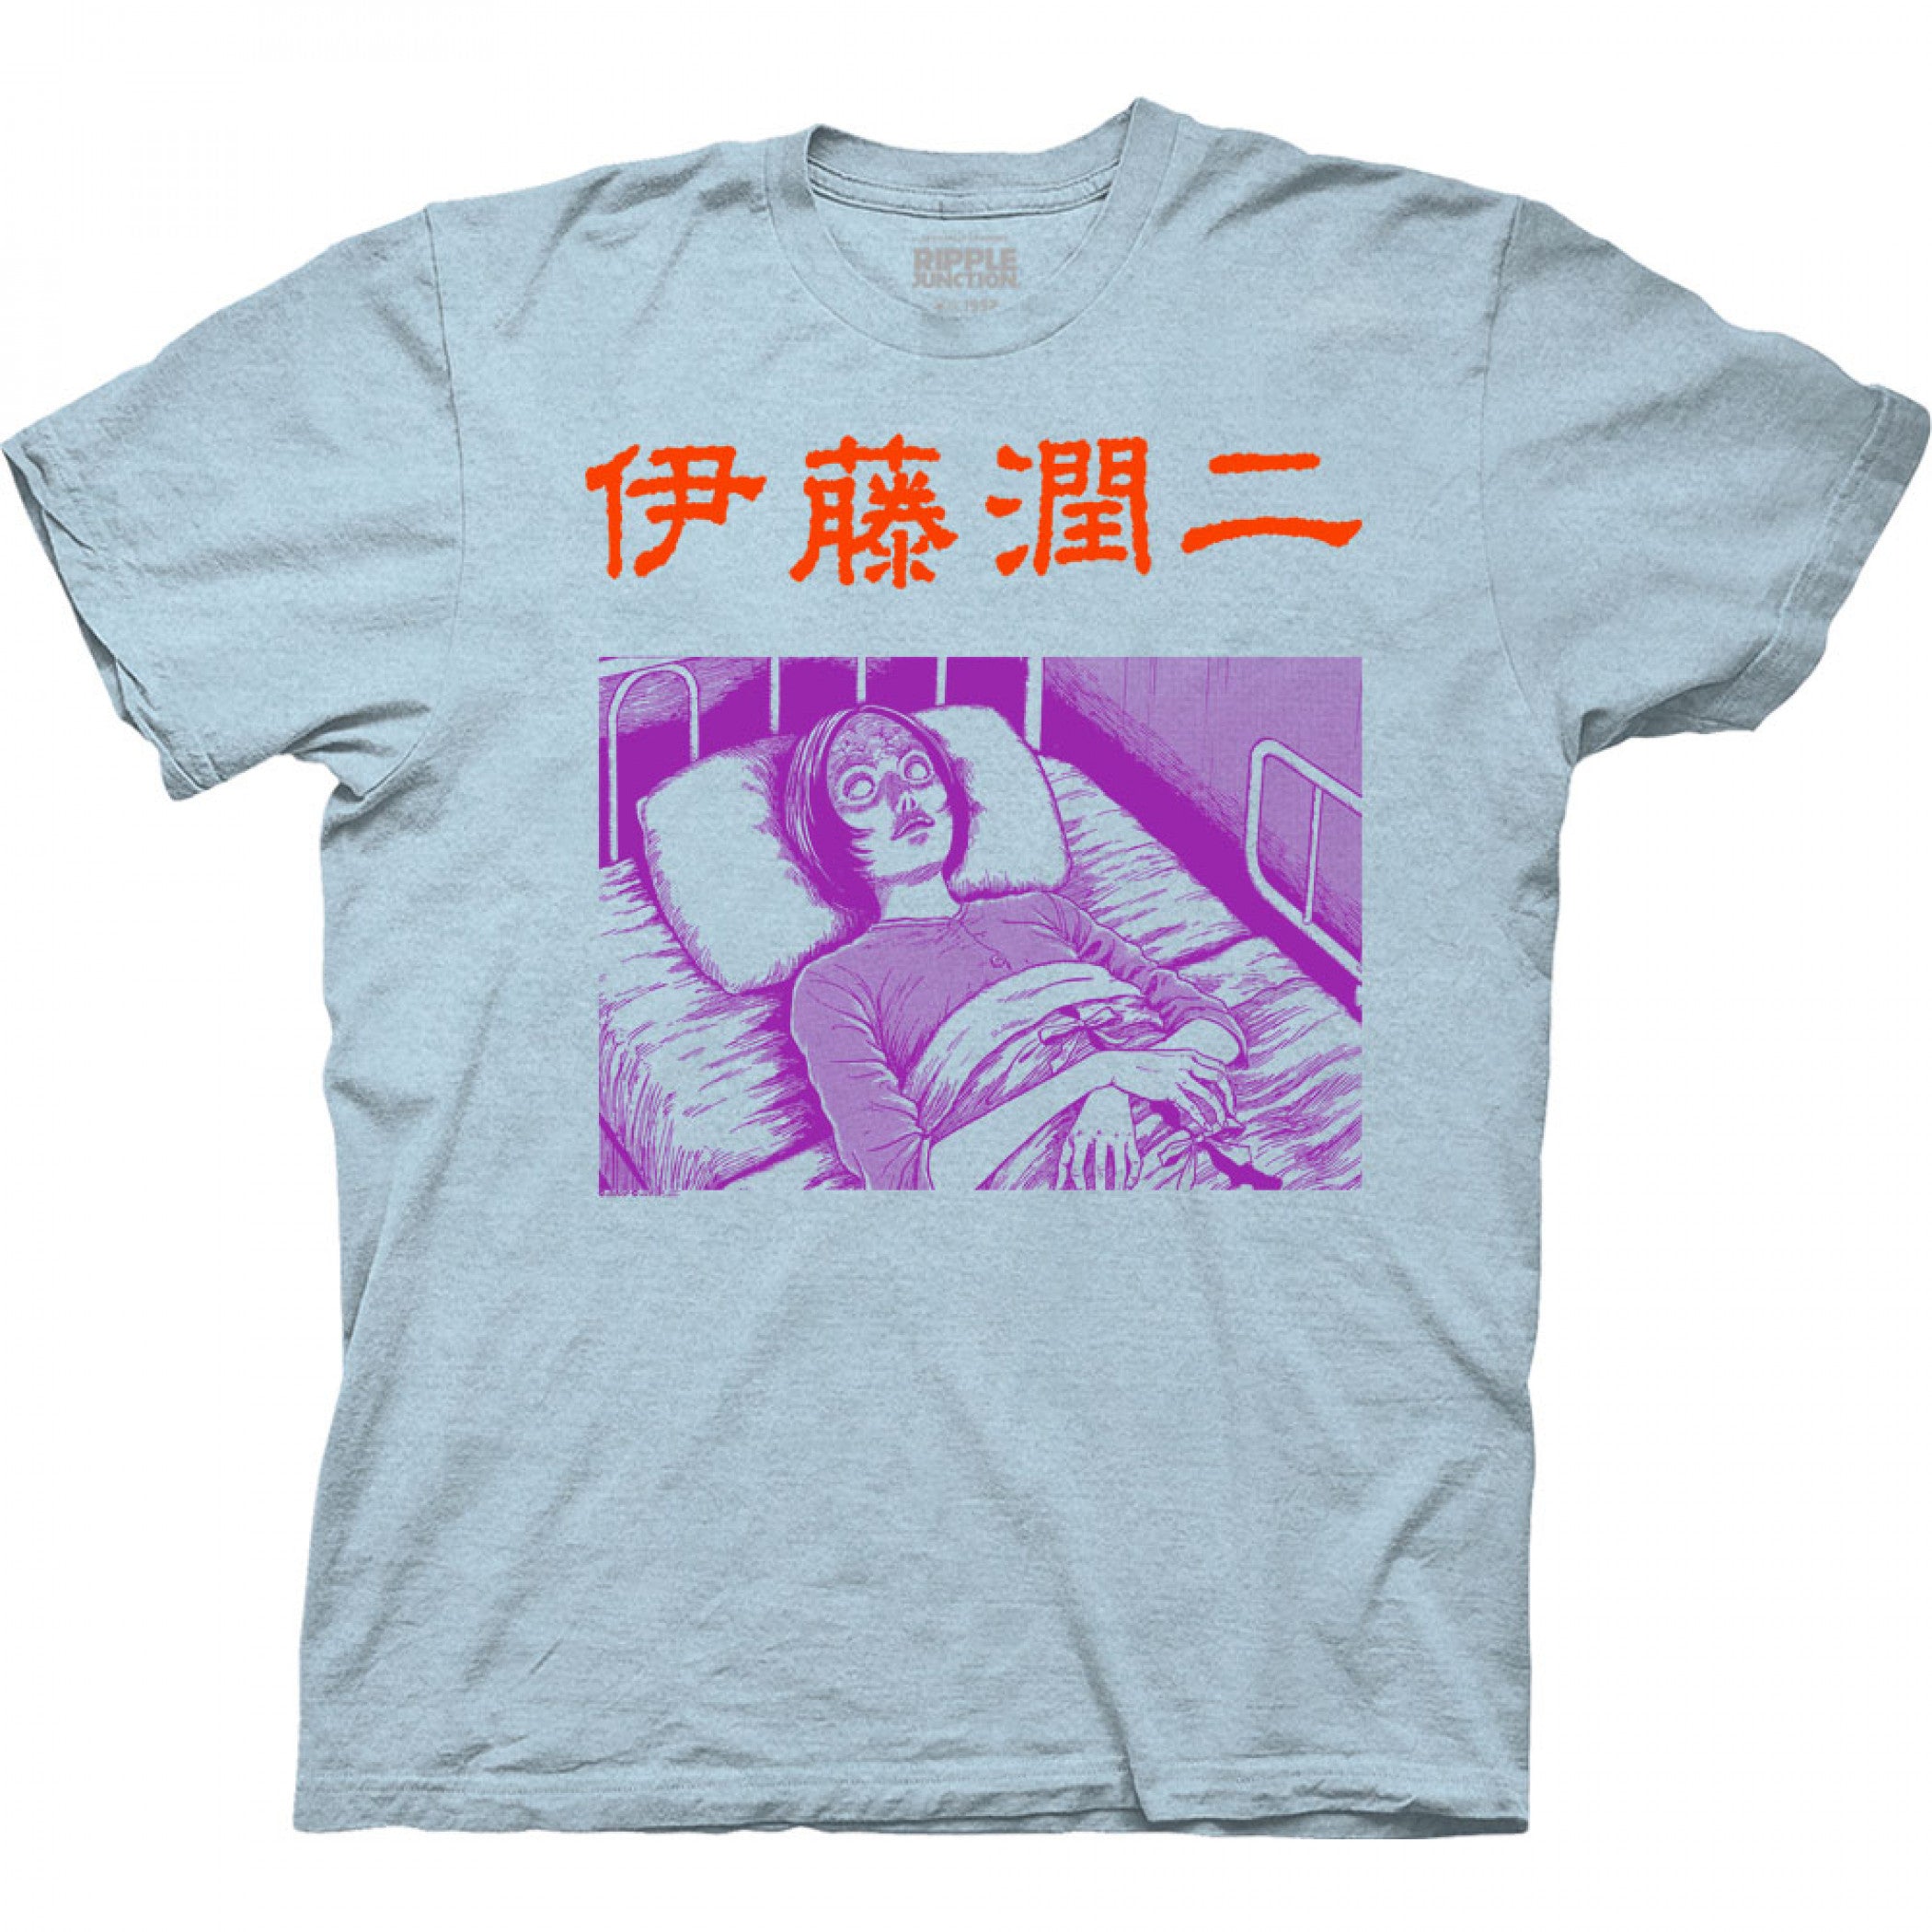 title:Junji Ito Long Dream Permanent Sleep T-Shirt;color:Blue